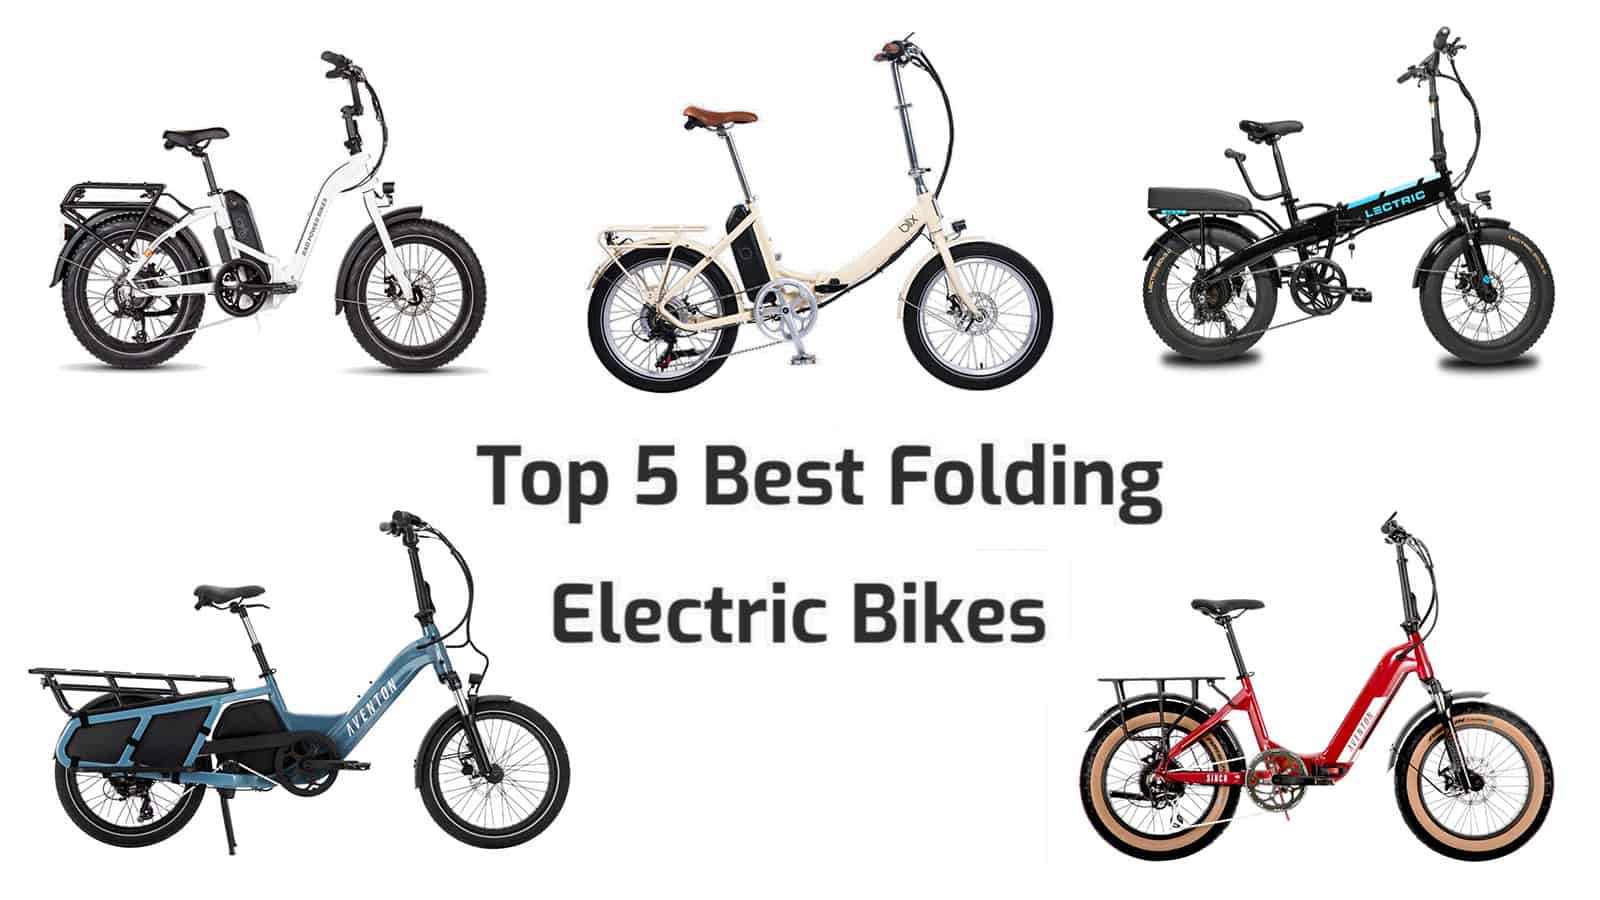 Top 5 Best Folding Electric Bikes